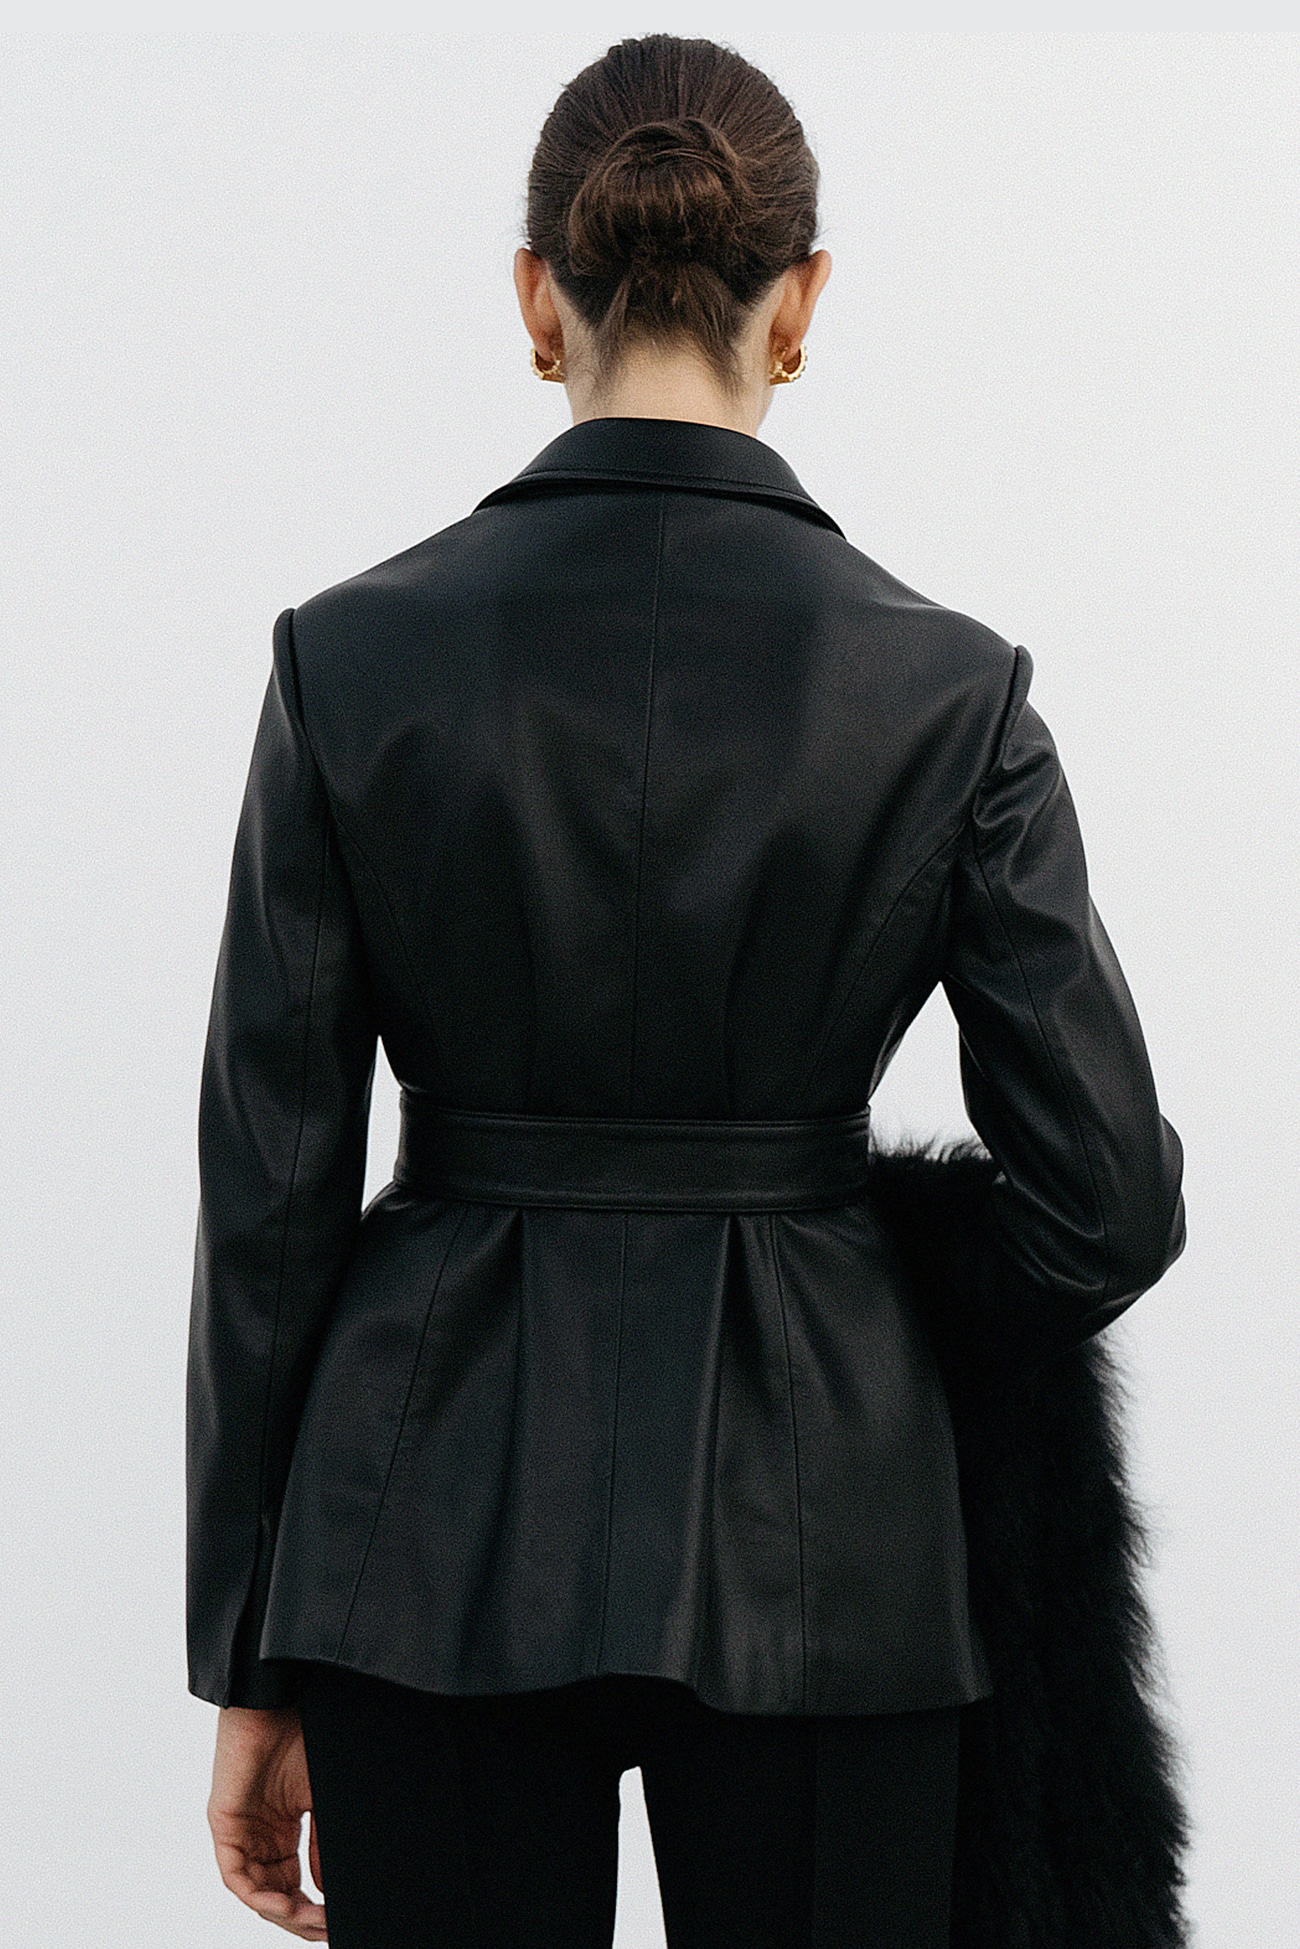 HIGH QUALITY LINE - Joan Hourglass Leather Jacket (BLACK)